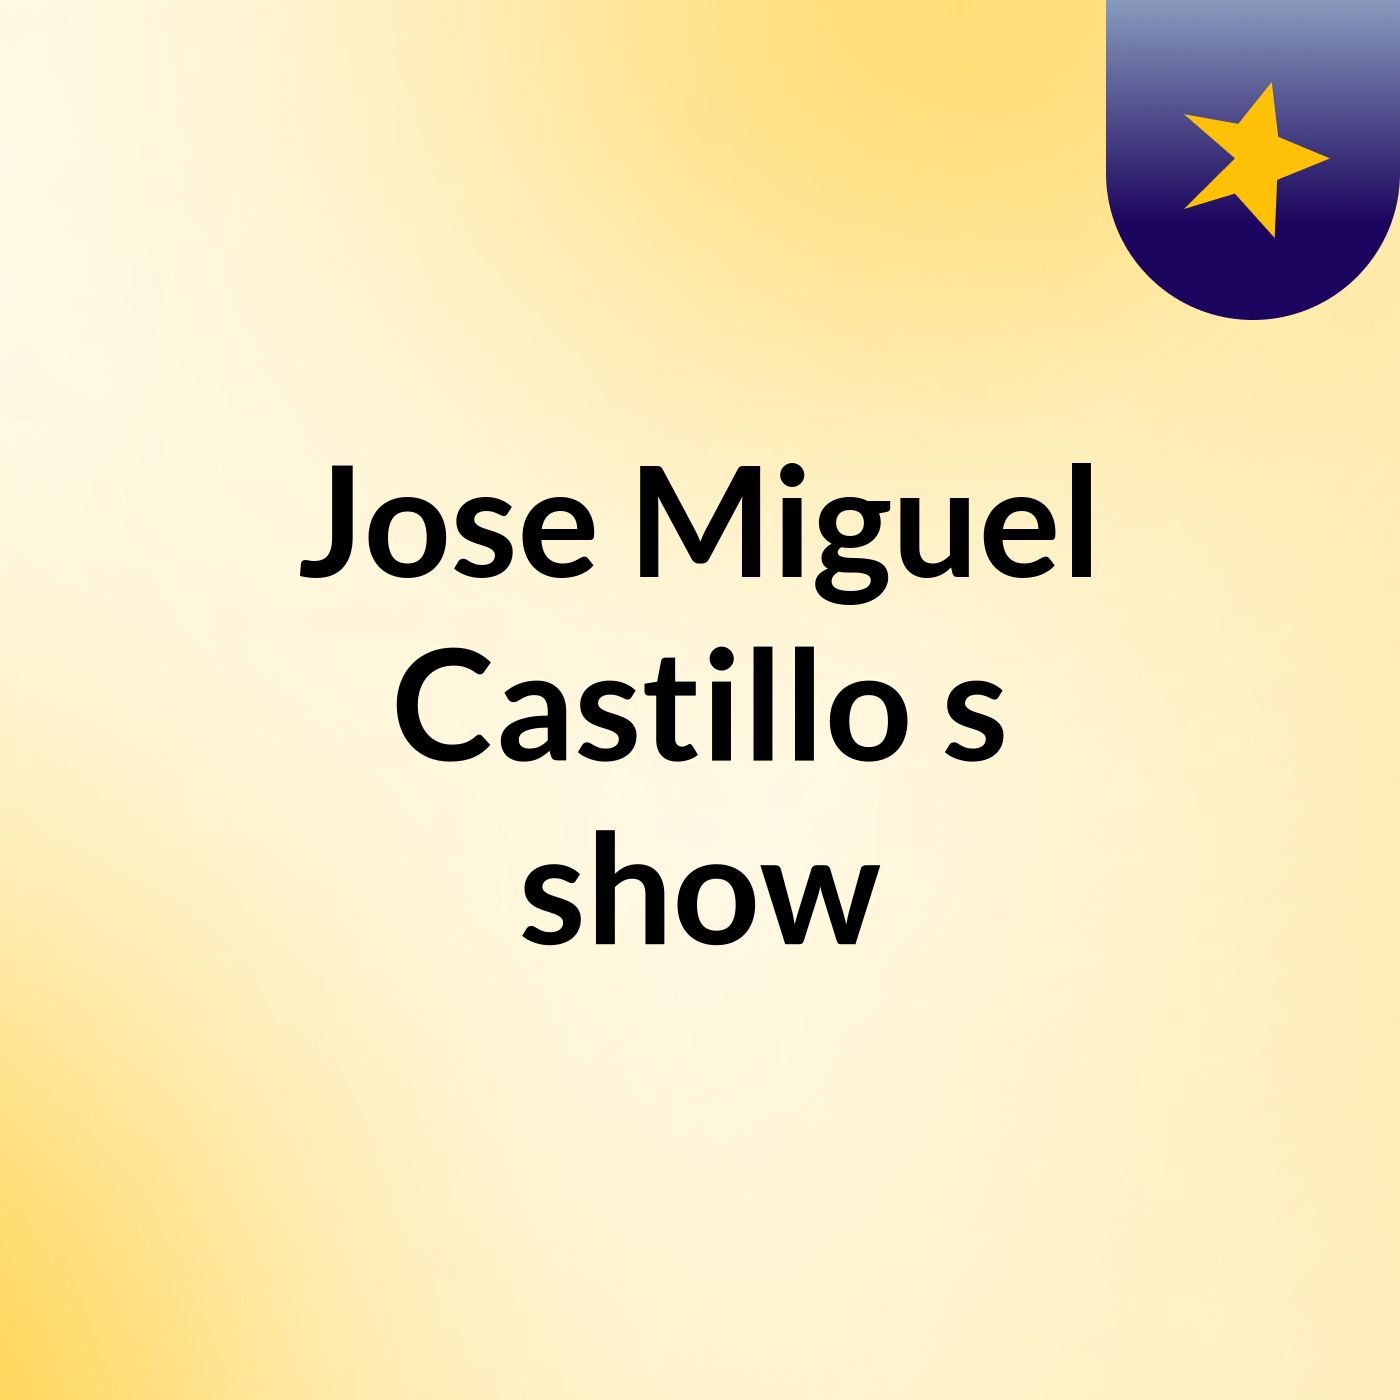 Jose Miguel Castillo's show